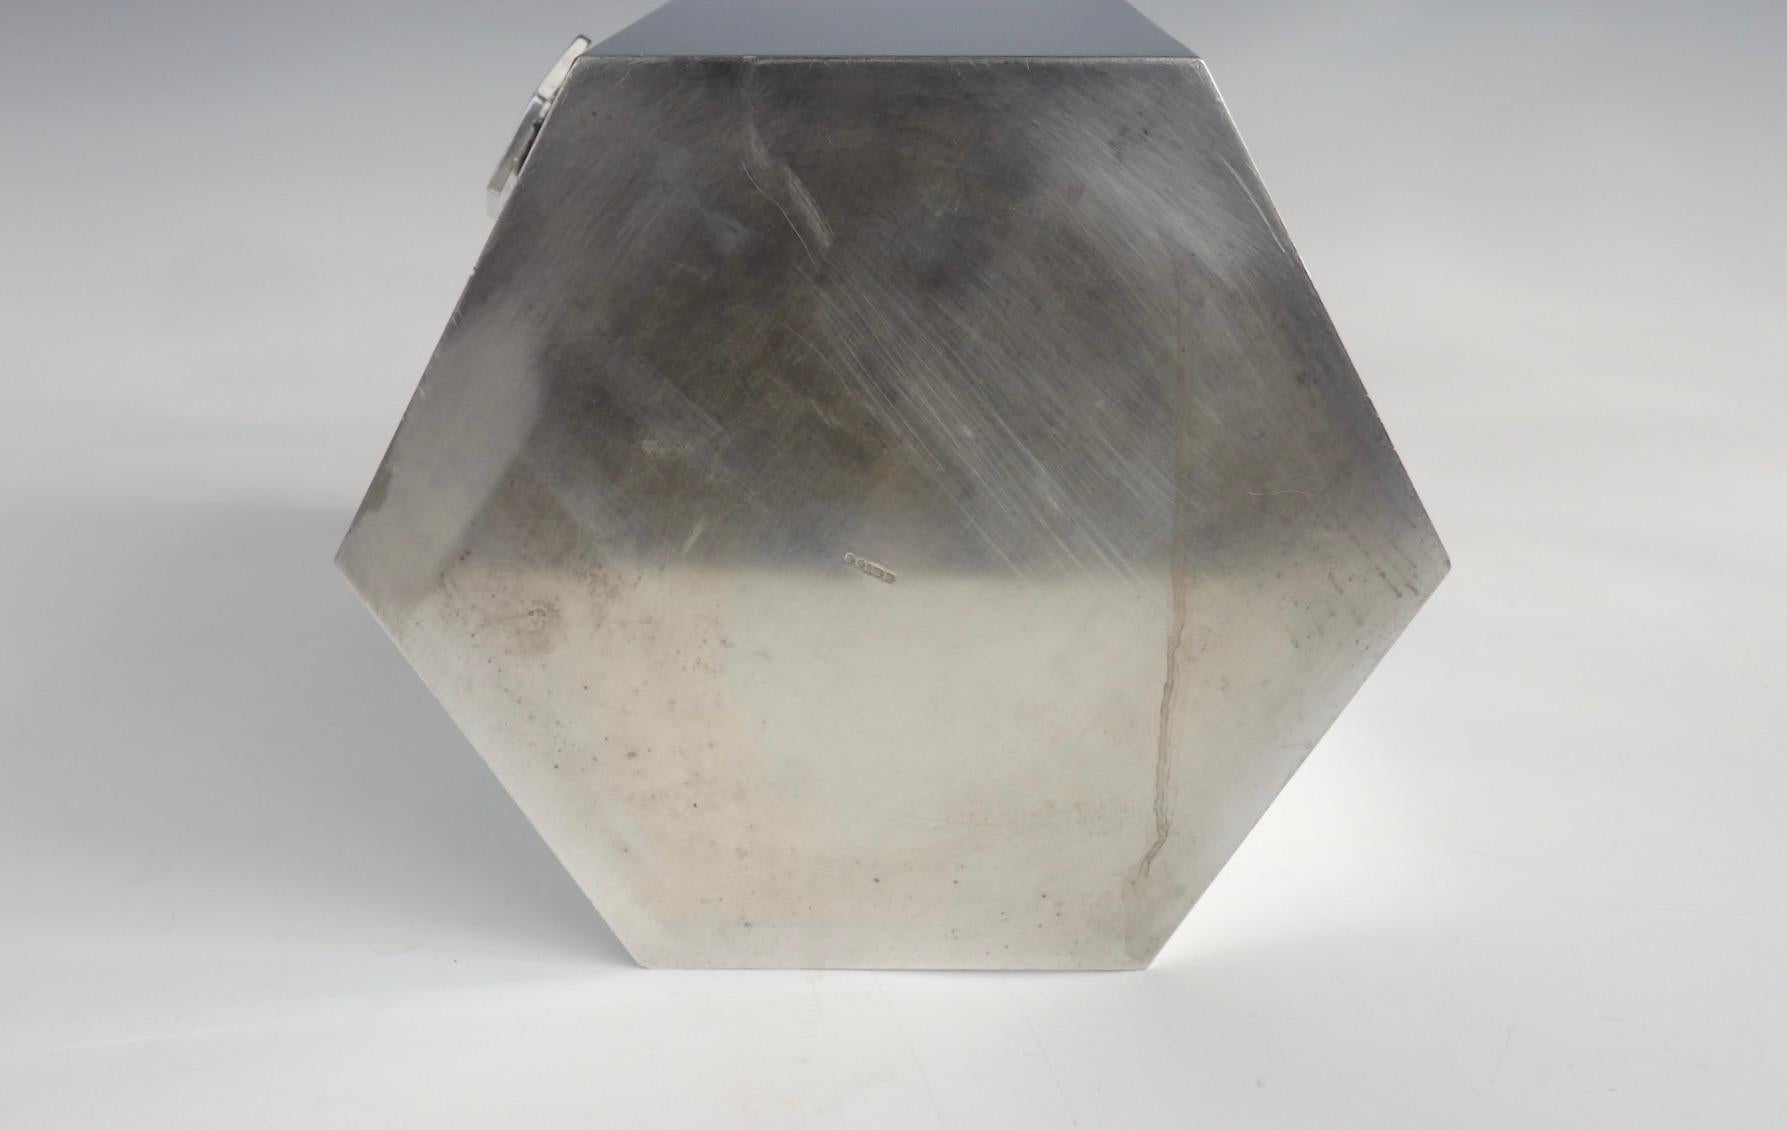 20th Century Art Deco Era Silver Plate Ice Bucket in Geometric Form with Hexagon Handles